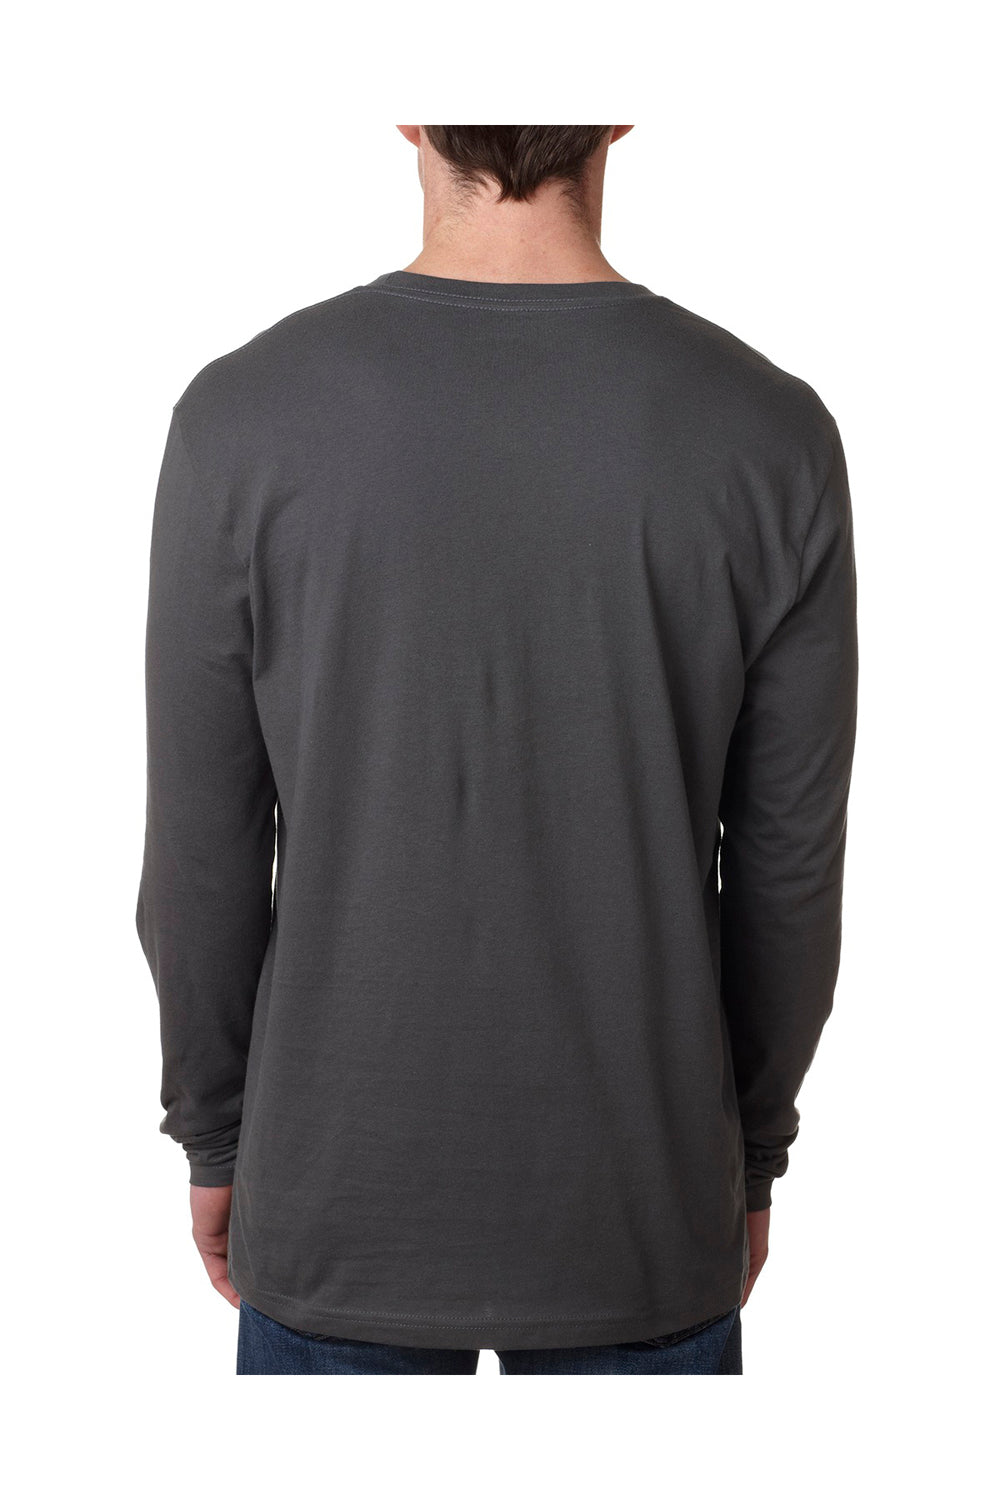 Next Level N3601 Mens Fine Jersey Long Sleeve Crewneck T-Shirt Heavy Metal Grey Back